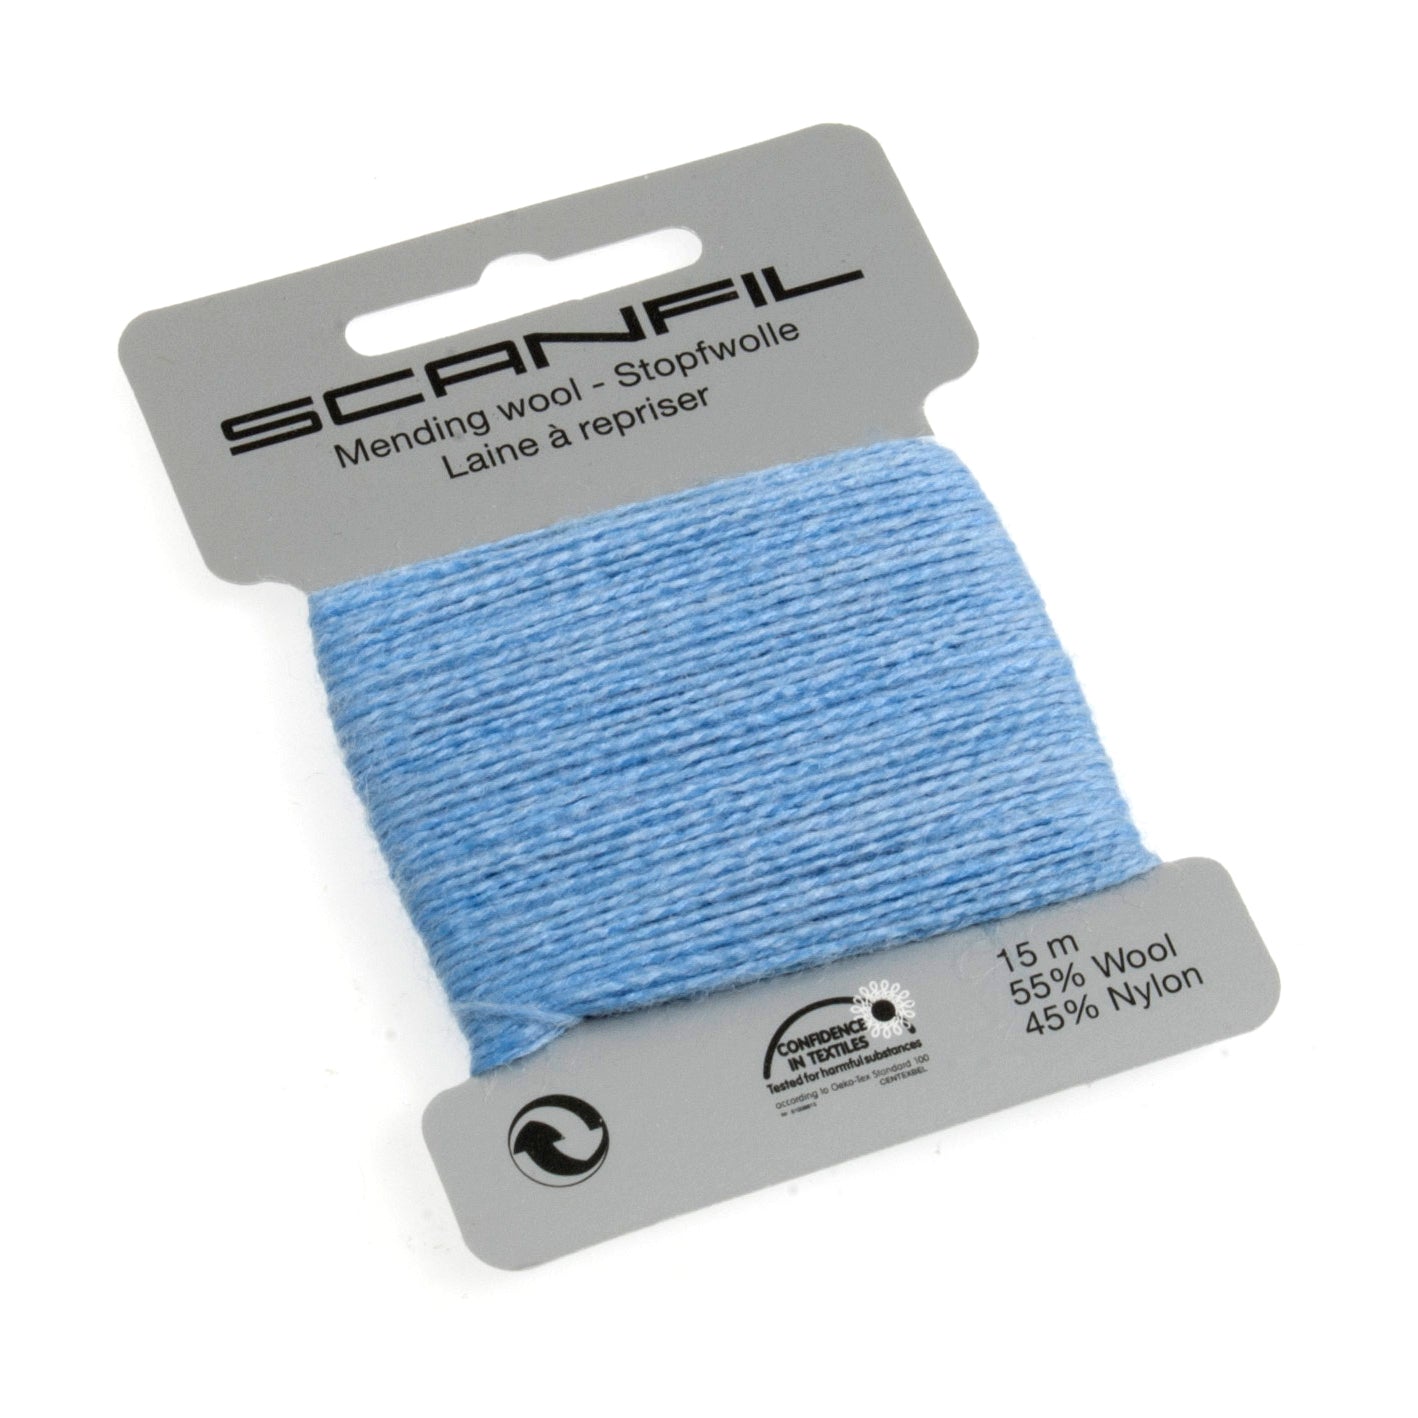 Scanfil - Mending Wool Thread - 15m - 067 Saxe Blue